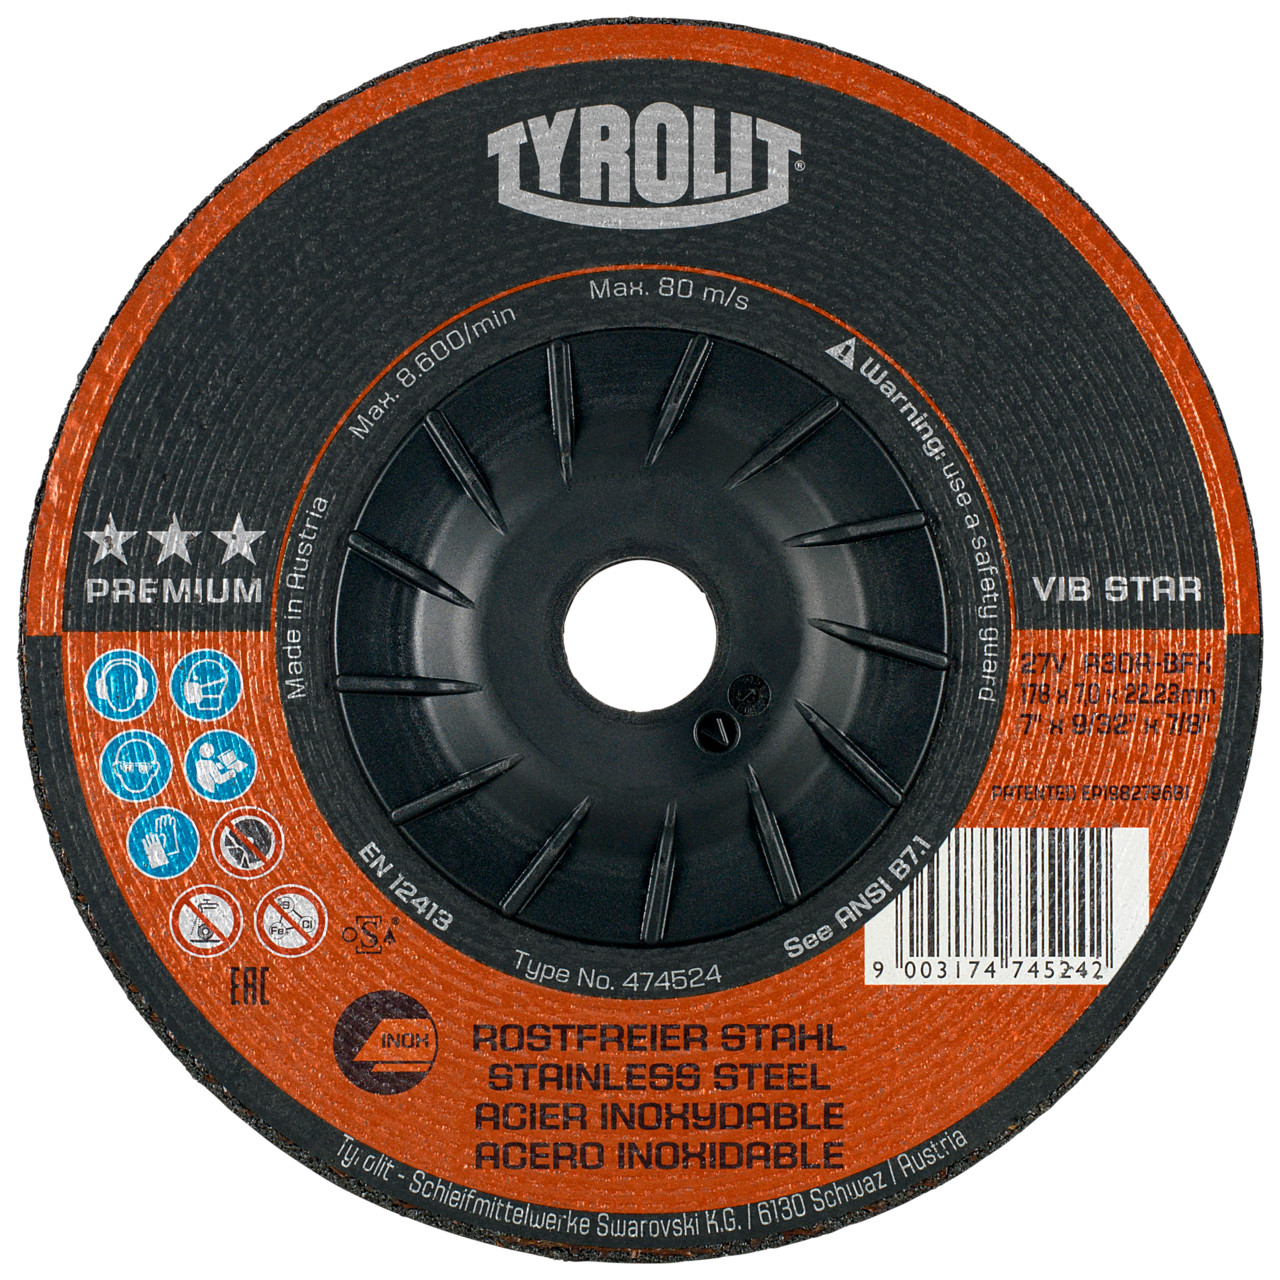 TYROLIT grinding wheel DxUxH 230x7x22.23 VIBSTAR for stainless steel, shape: 27 - offset version, Art. 474526